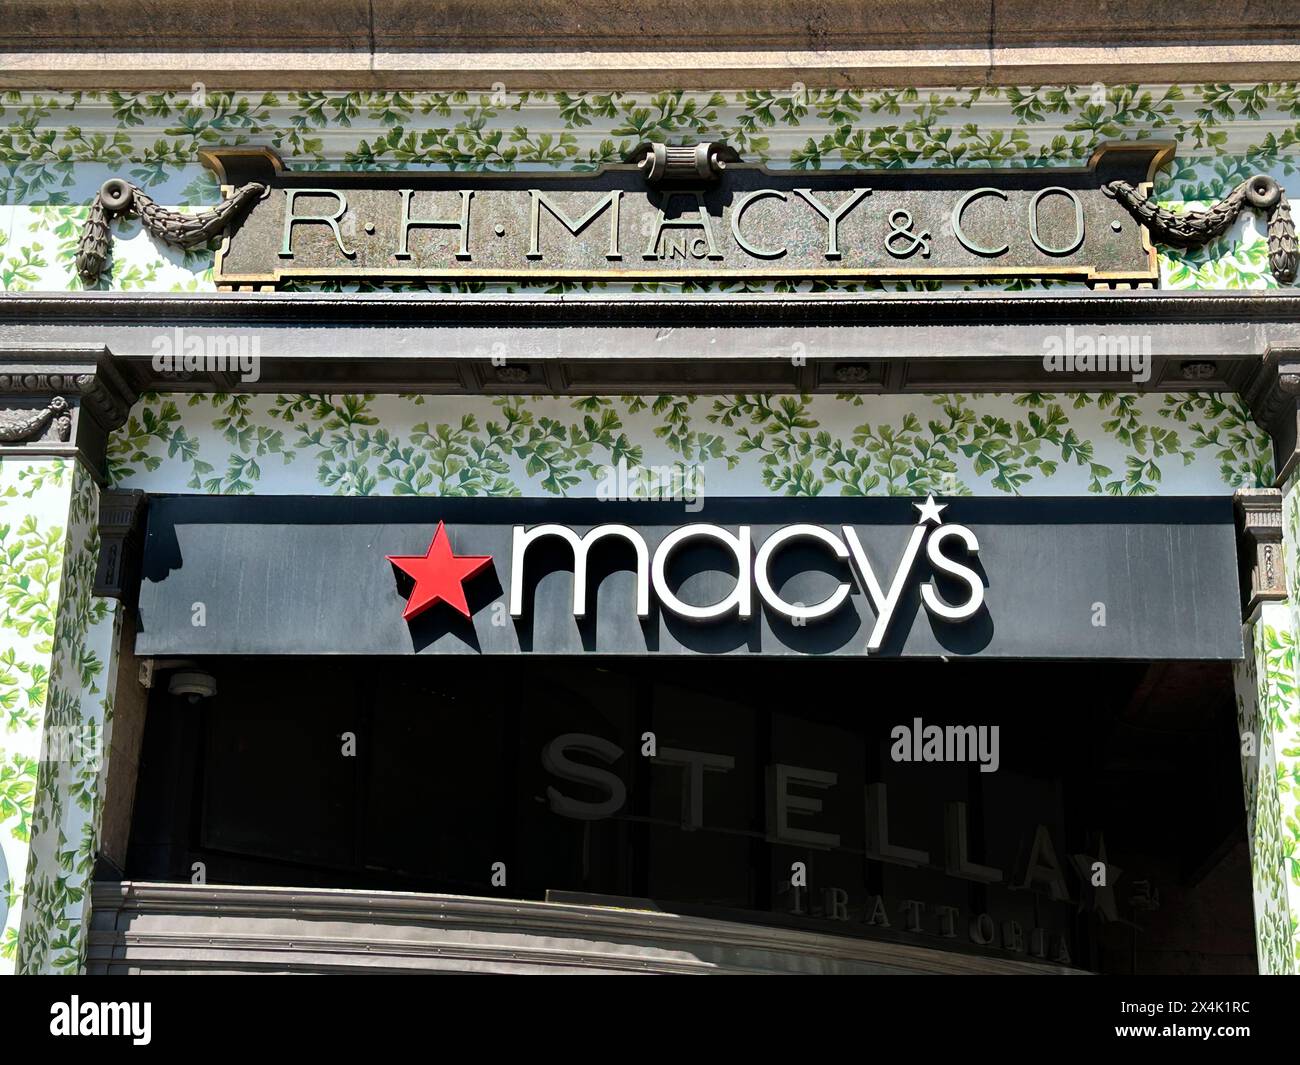 R.H. Macy & Company, exterior view detail, New York City, New York, USA Stock Photo